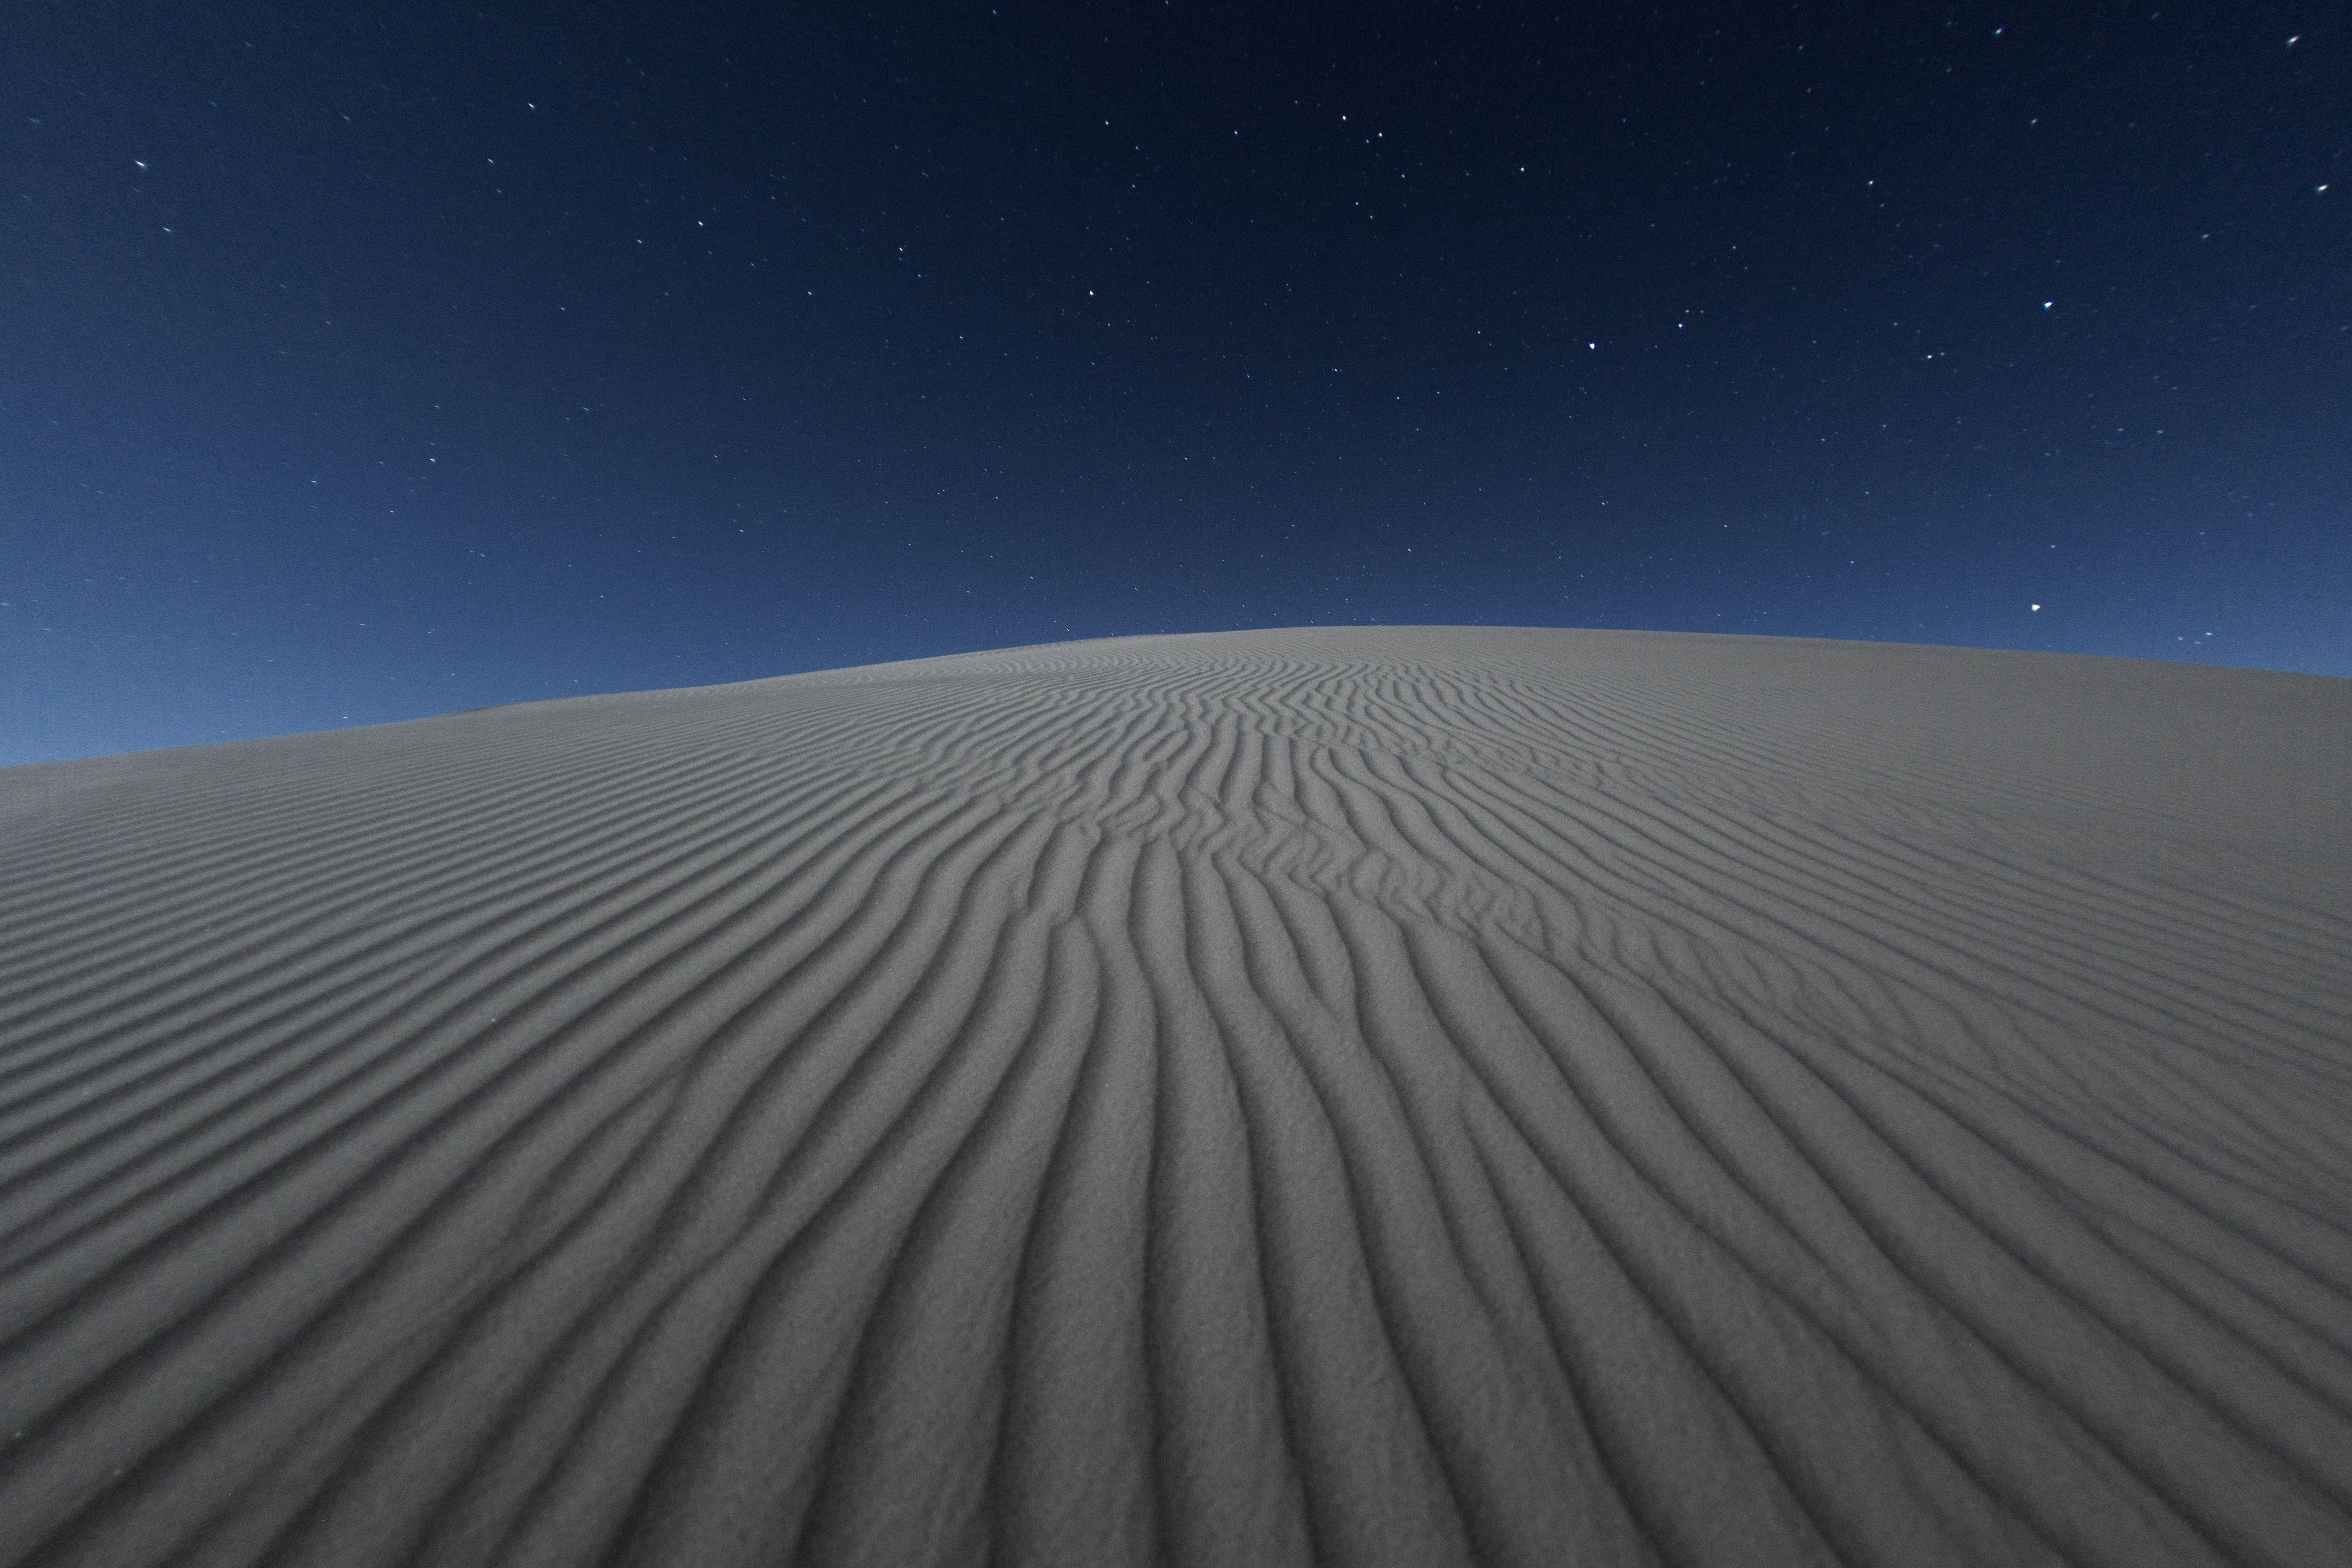 Download wallpaper 3840x2160 dunes, sands, desert, mountains, night, starry  sky 4k uhd 16:9 hd background